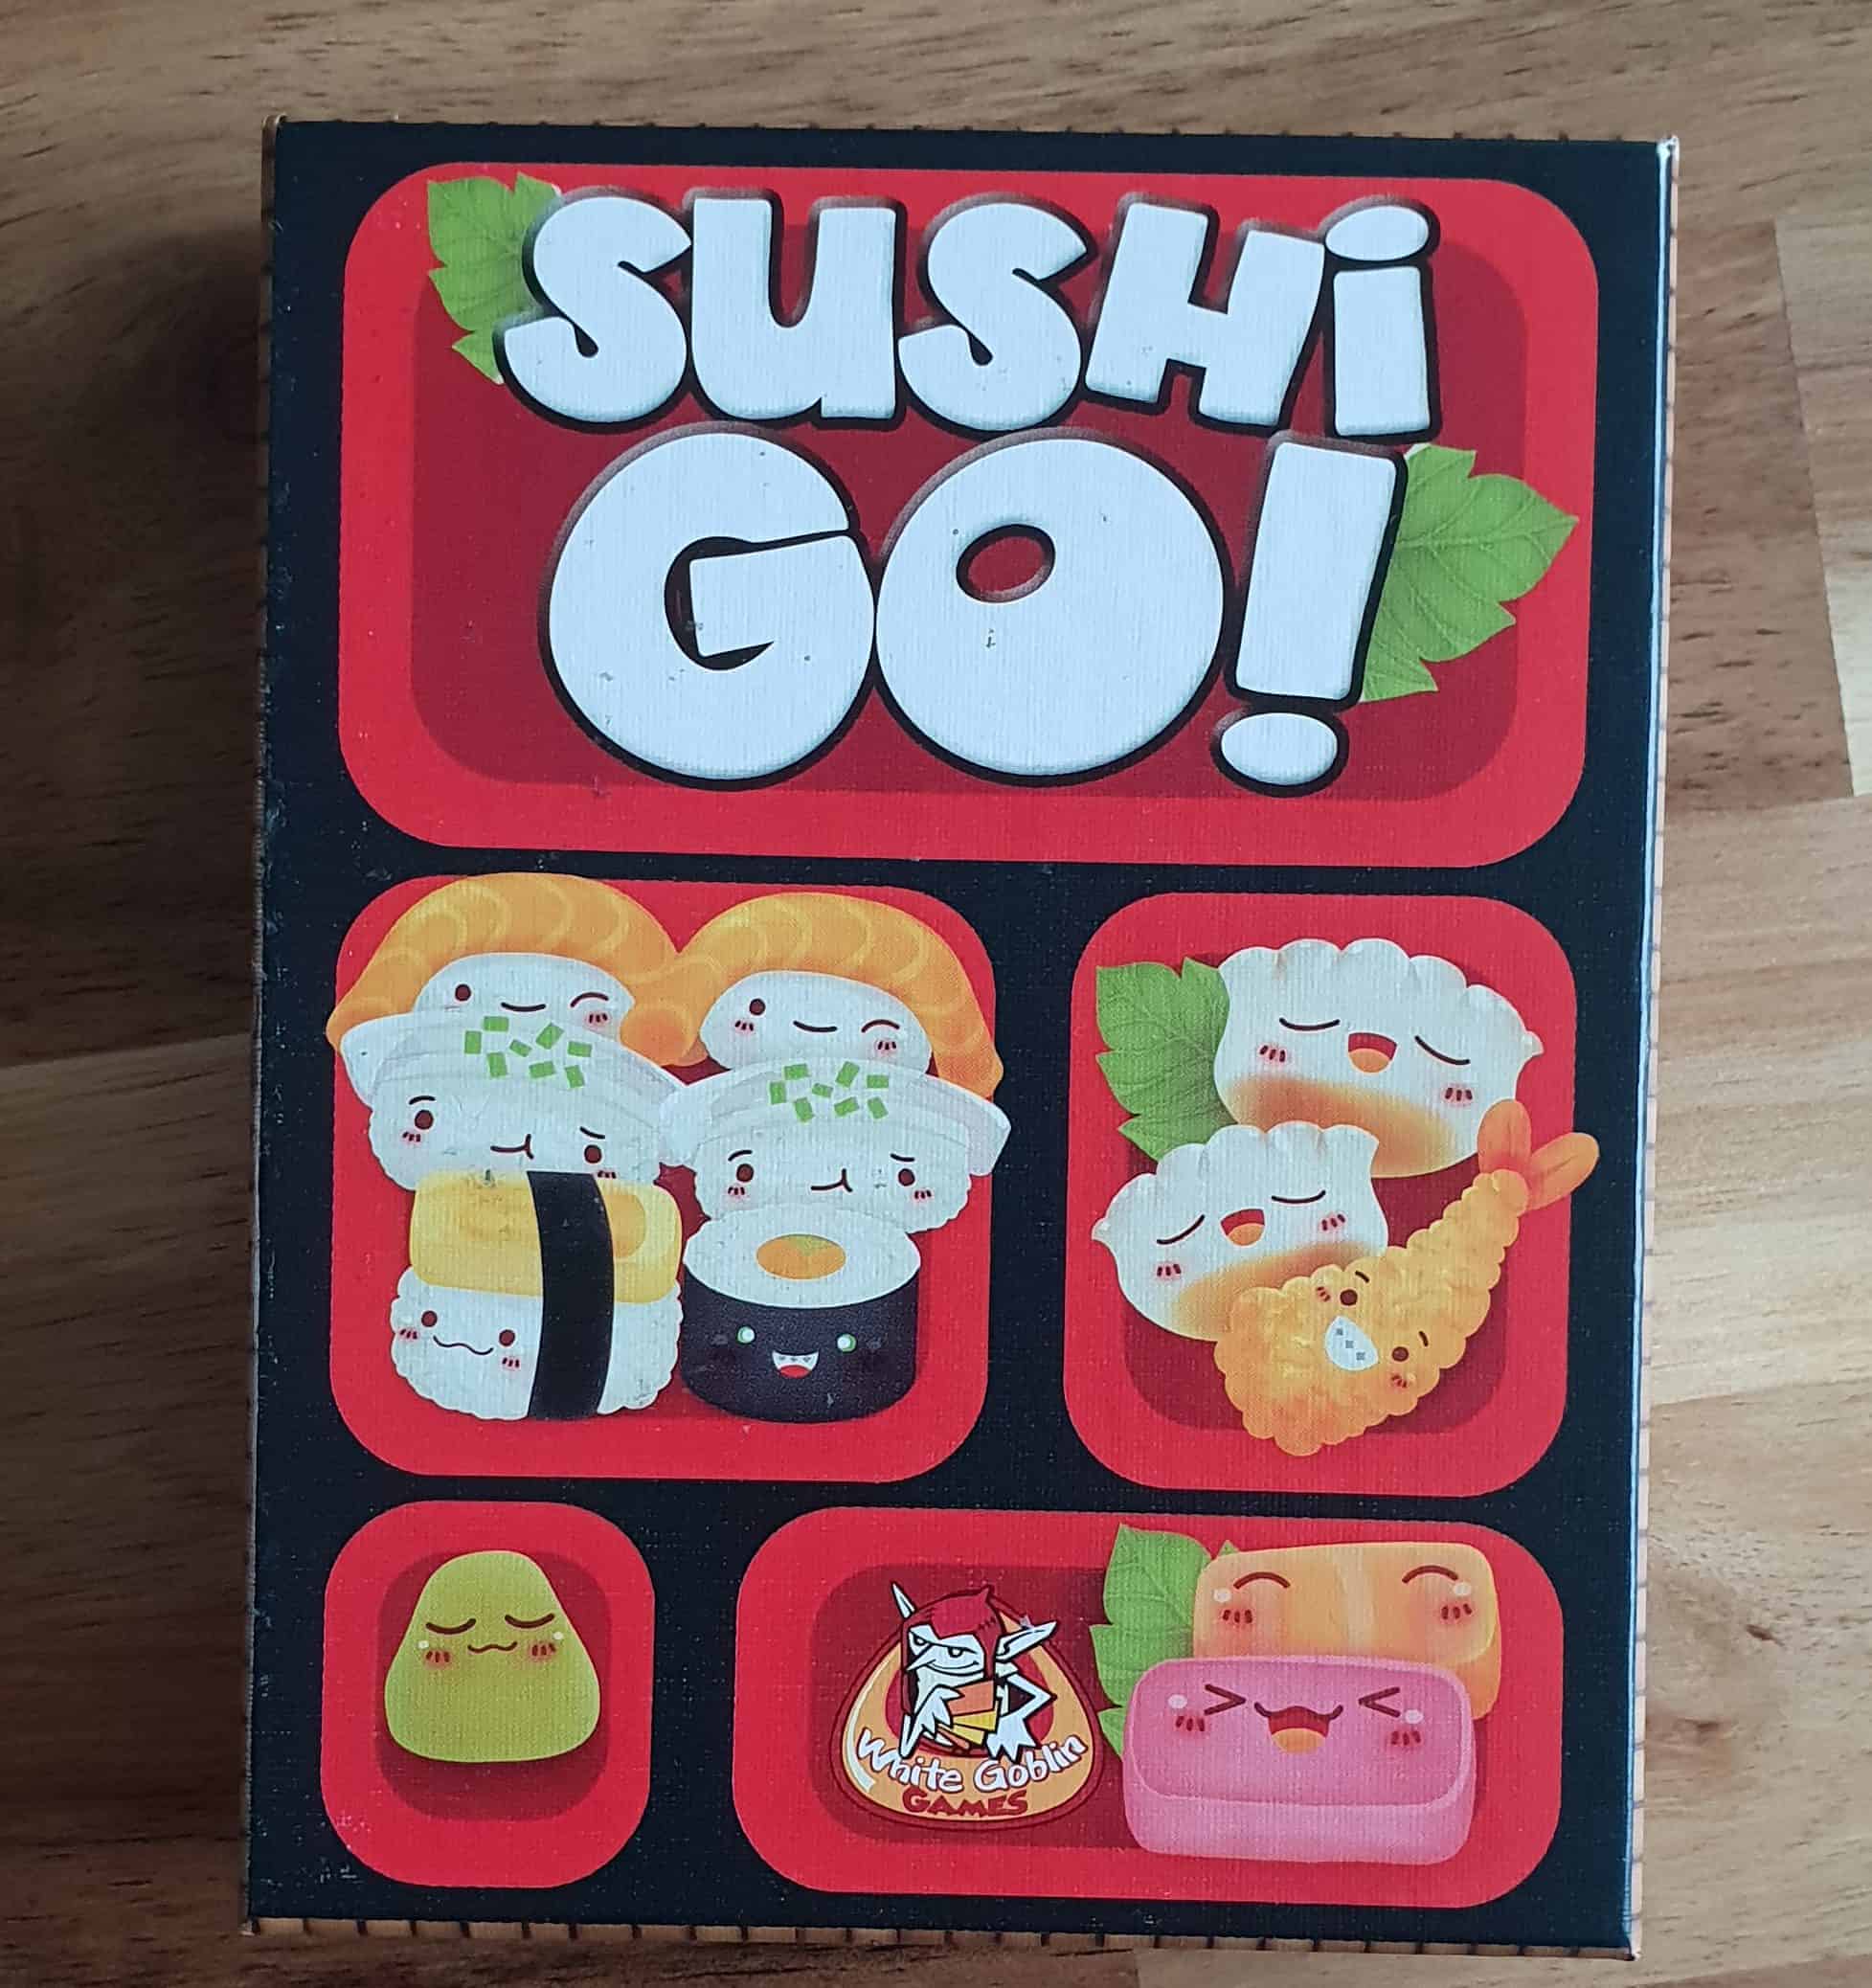 sushi go beste kaartspel onder 15 euro